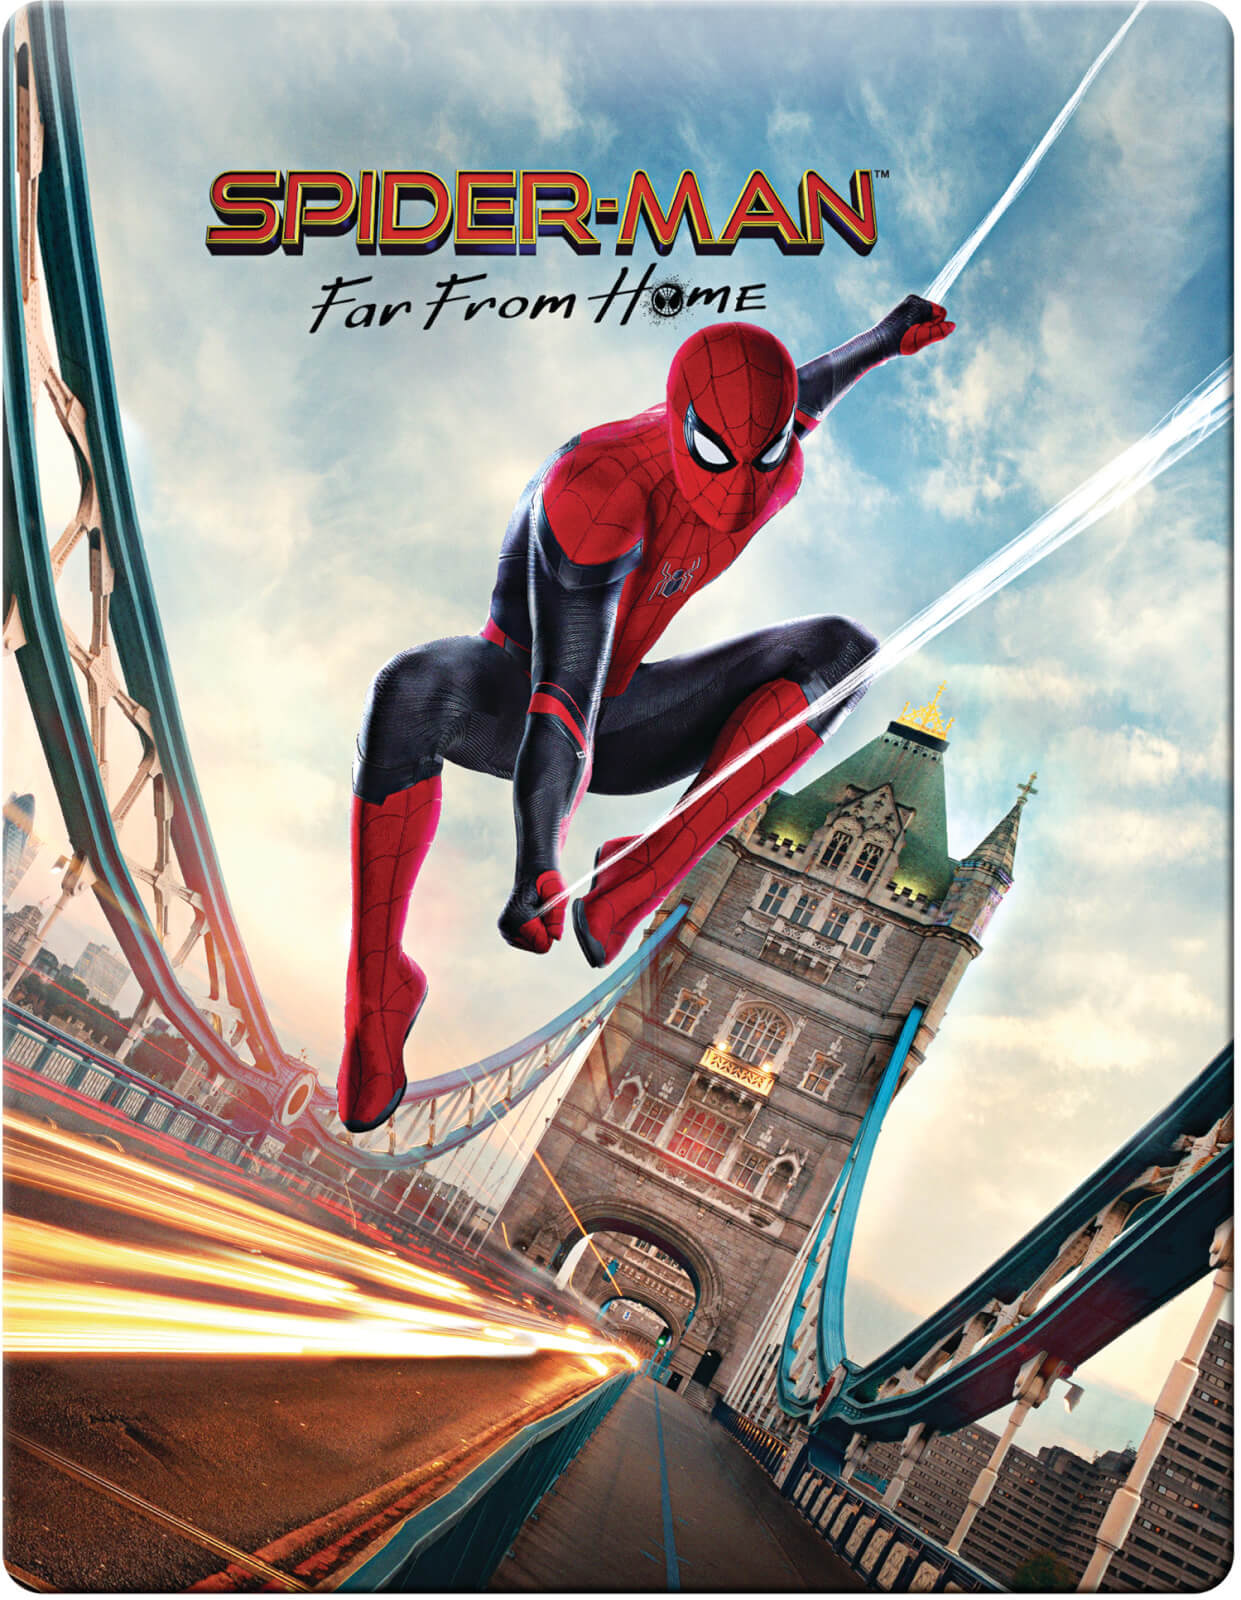 Spider Man Far From Home 4k Ultra Hd Includes 2d Blu Ray Zavvi Exclusive Steelbook Blu Ray Zavvi Uk